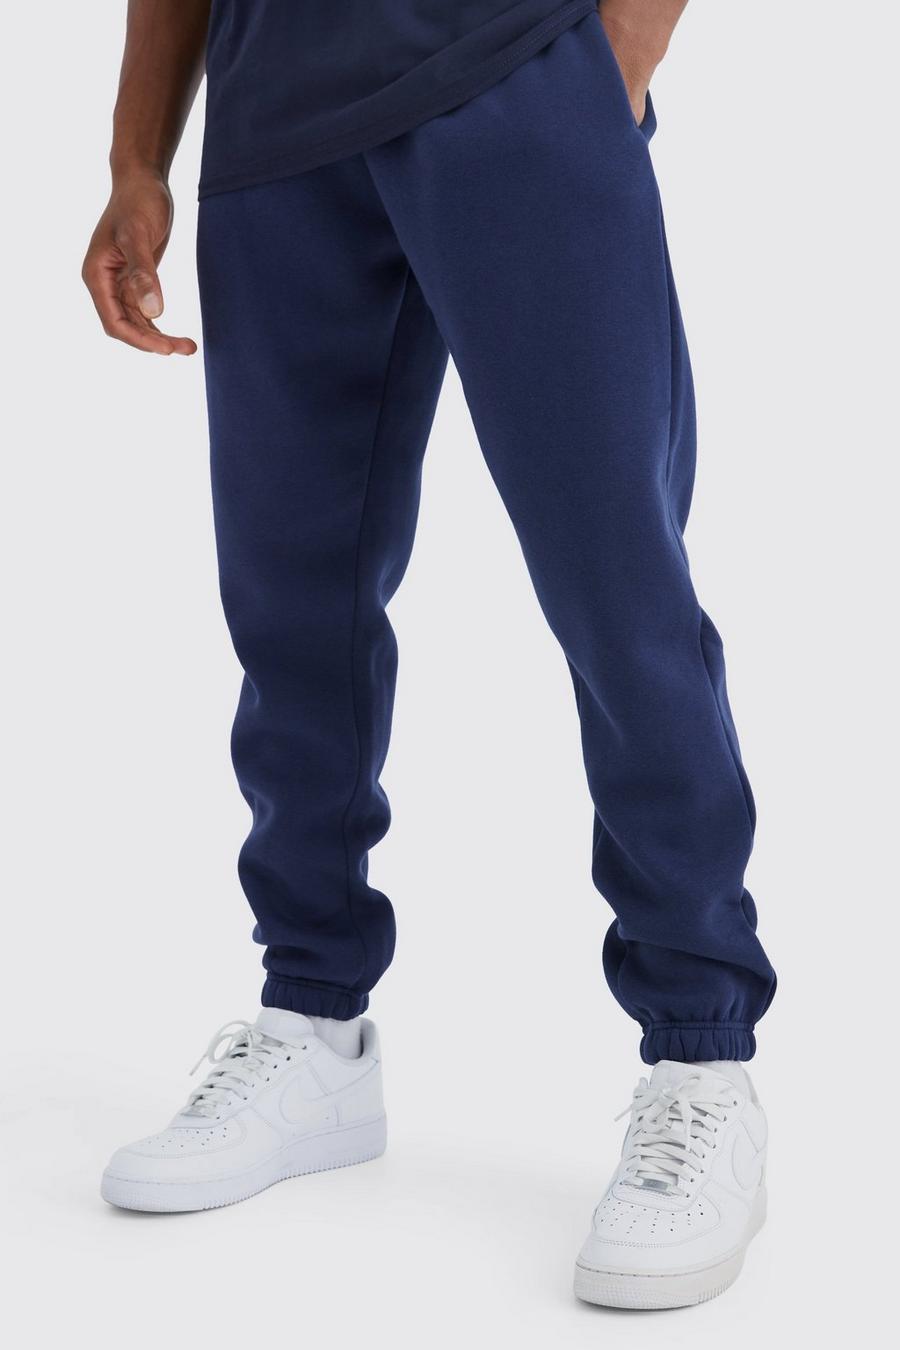 Pantalón deportivo básico ajustado, Navy